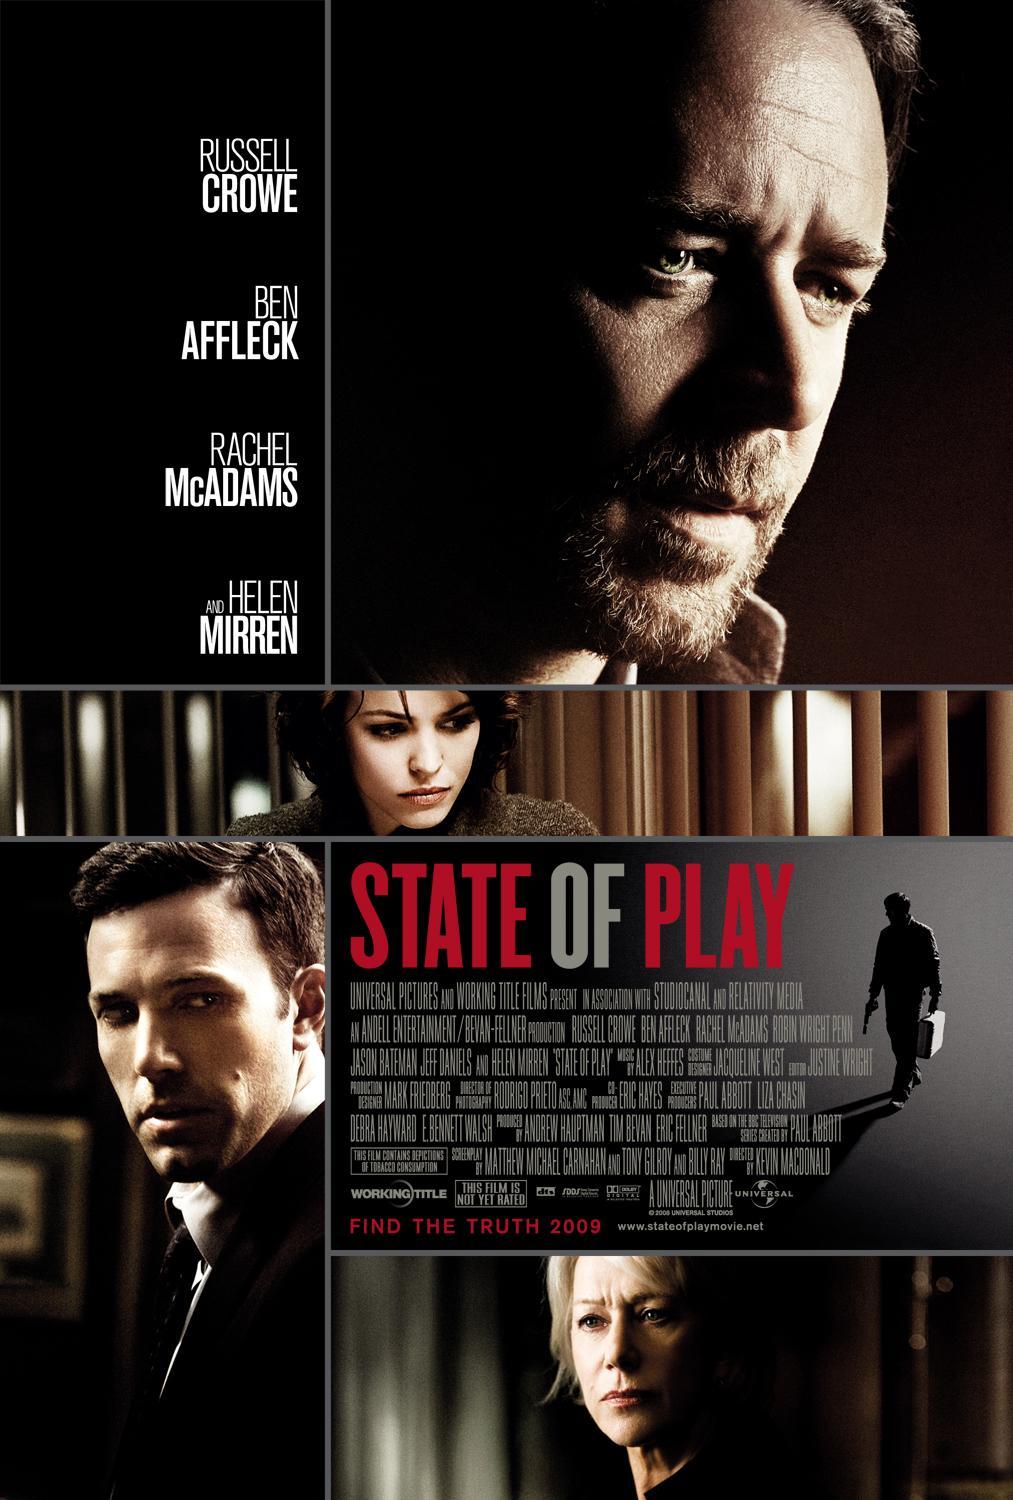 State of Play (2009) ซ่อนปมฆ่า ล่าซ้อนแผน Russell Crowe